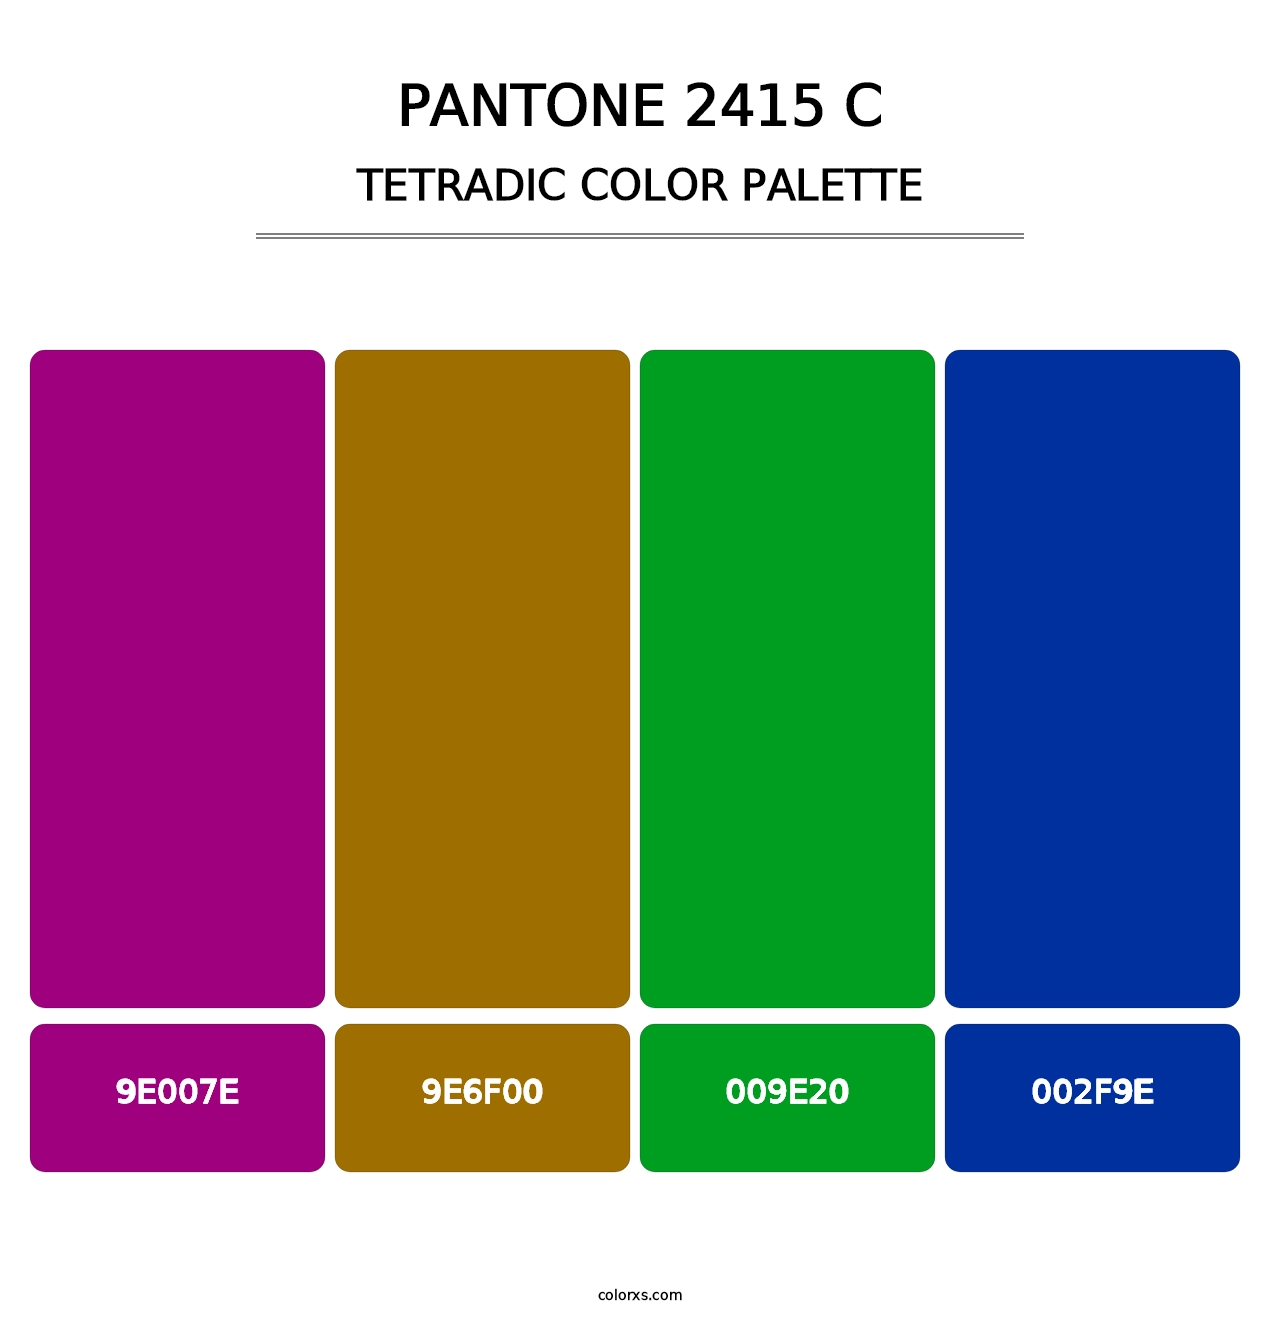 PANTONE 2415 C - Tetradic Color Palette